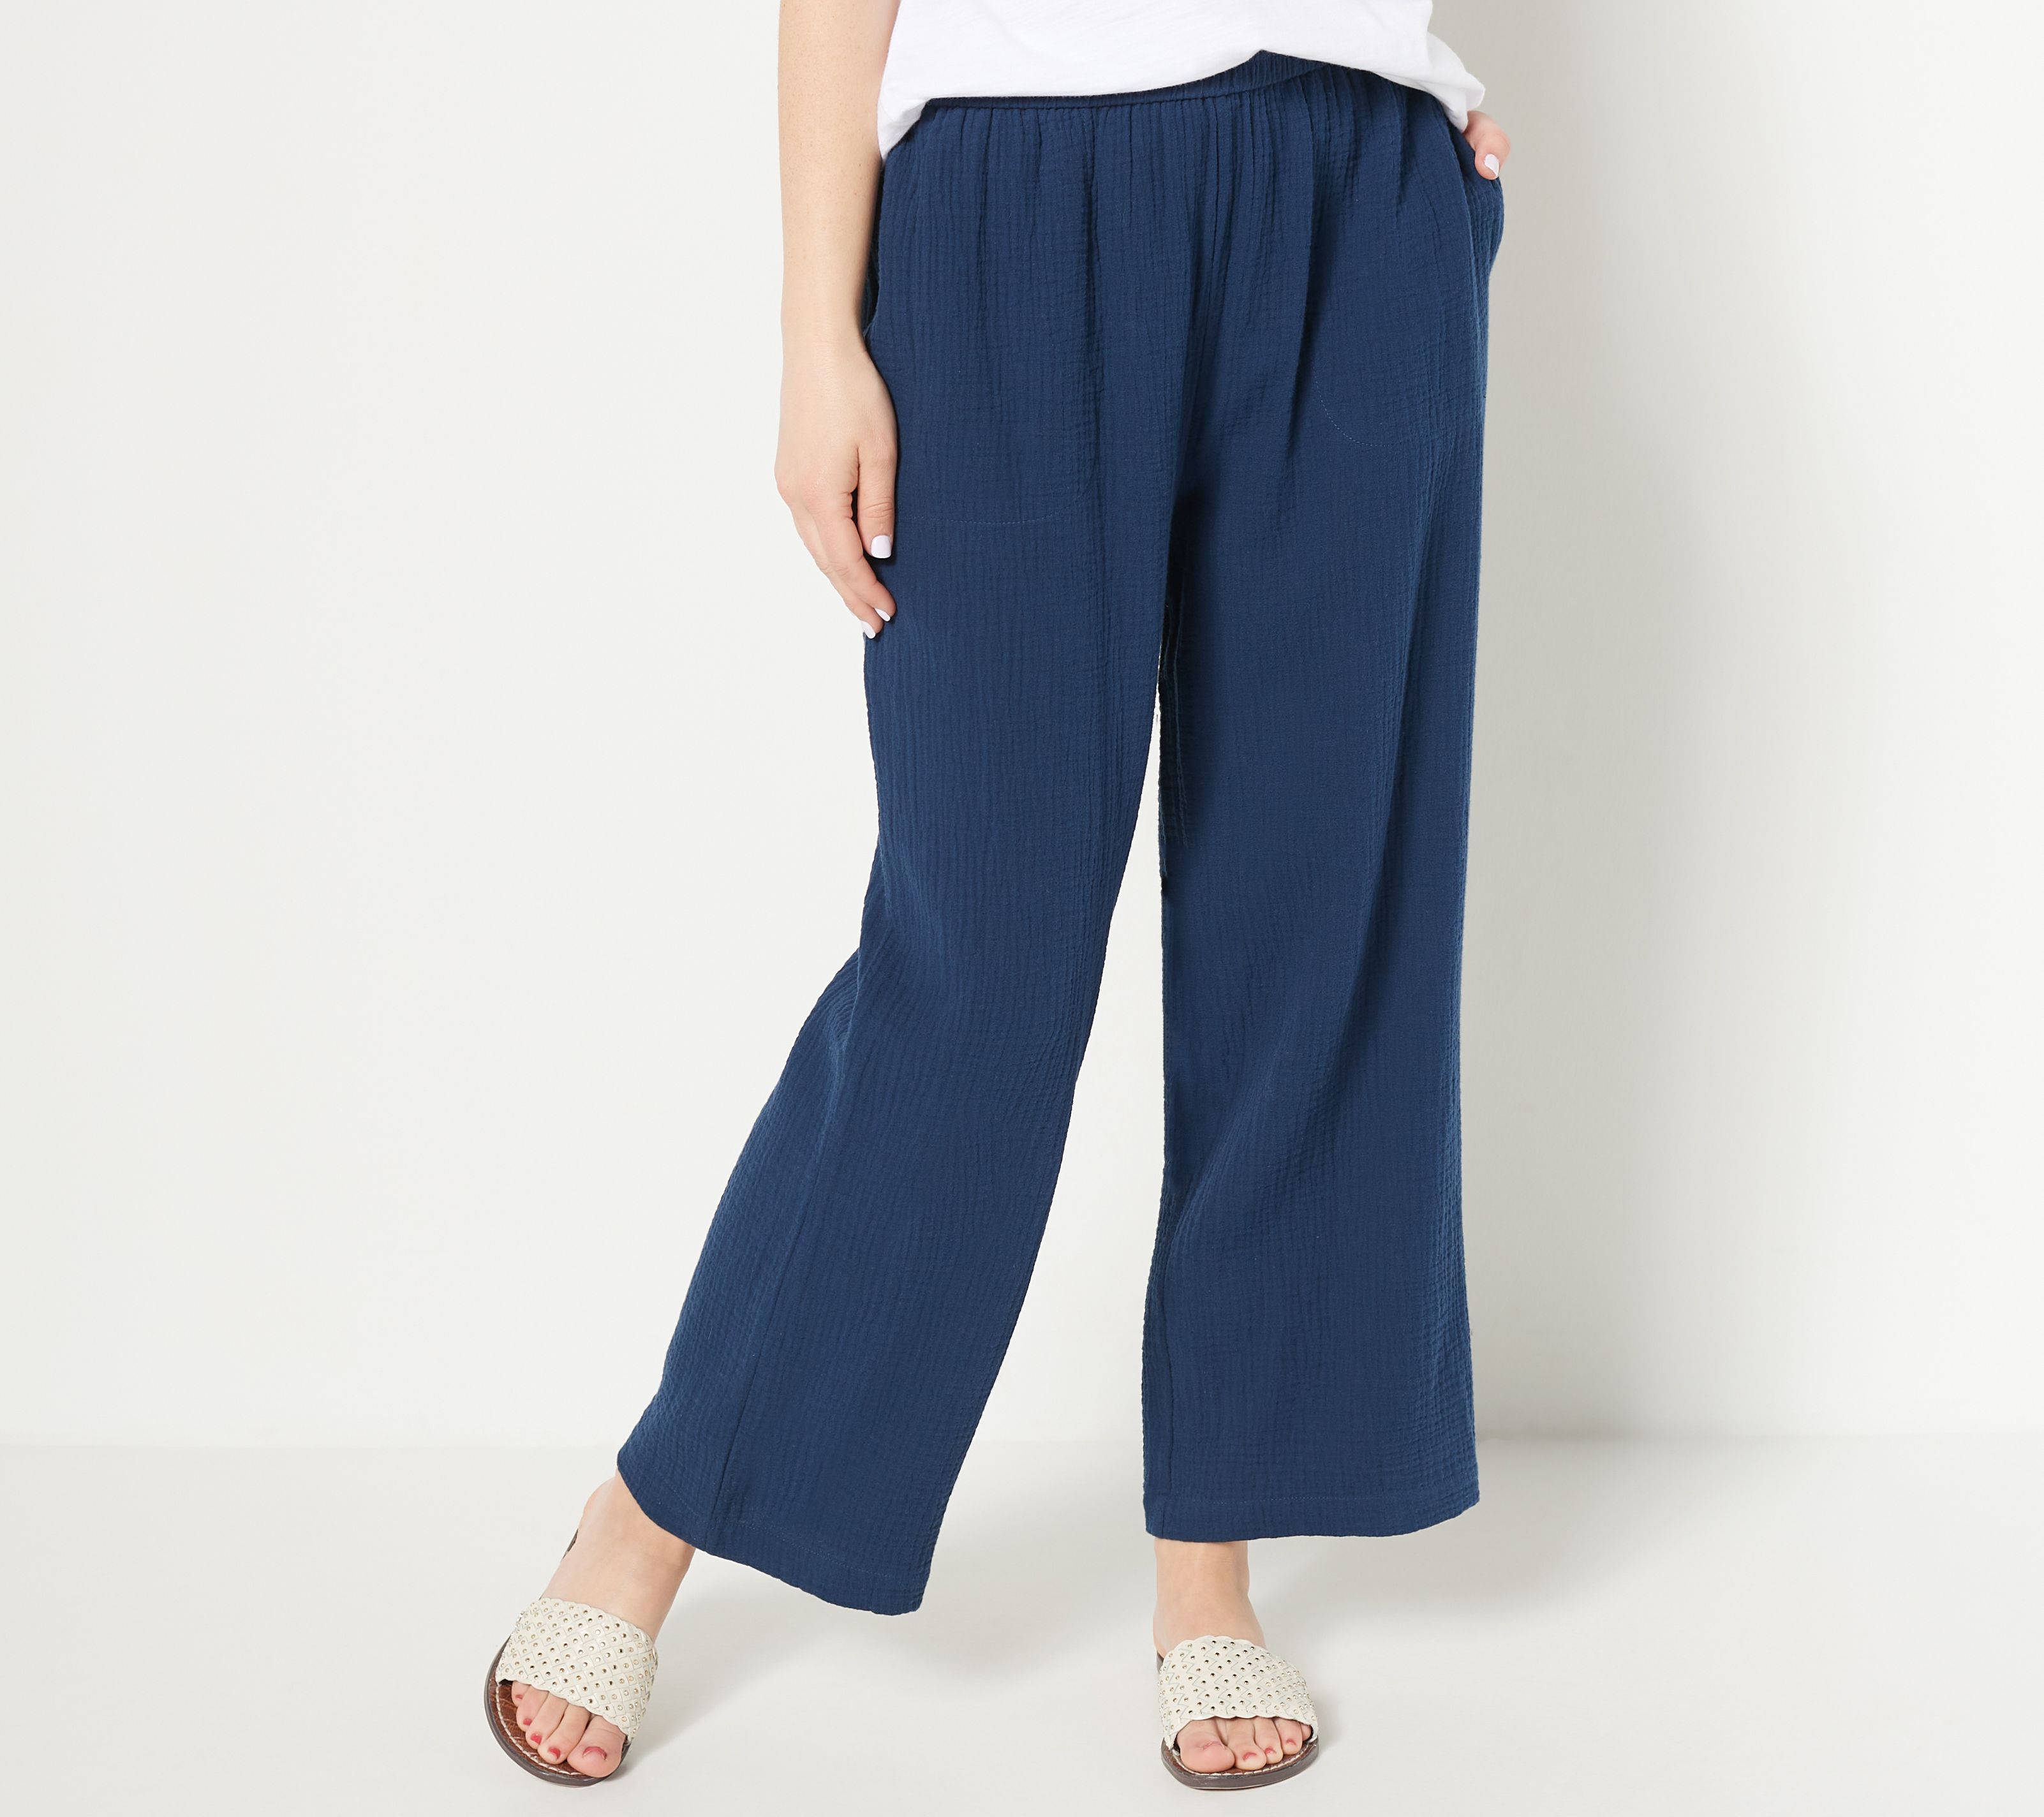 Denim & Co. Women's Pants Sz XS Beach Woven Cotton Blue A594659